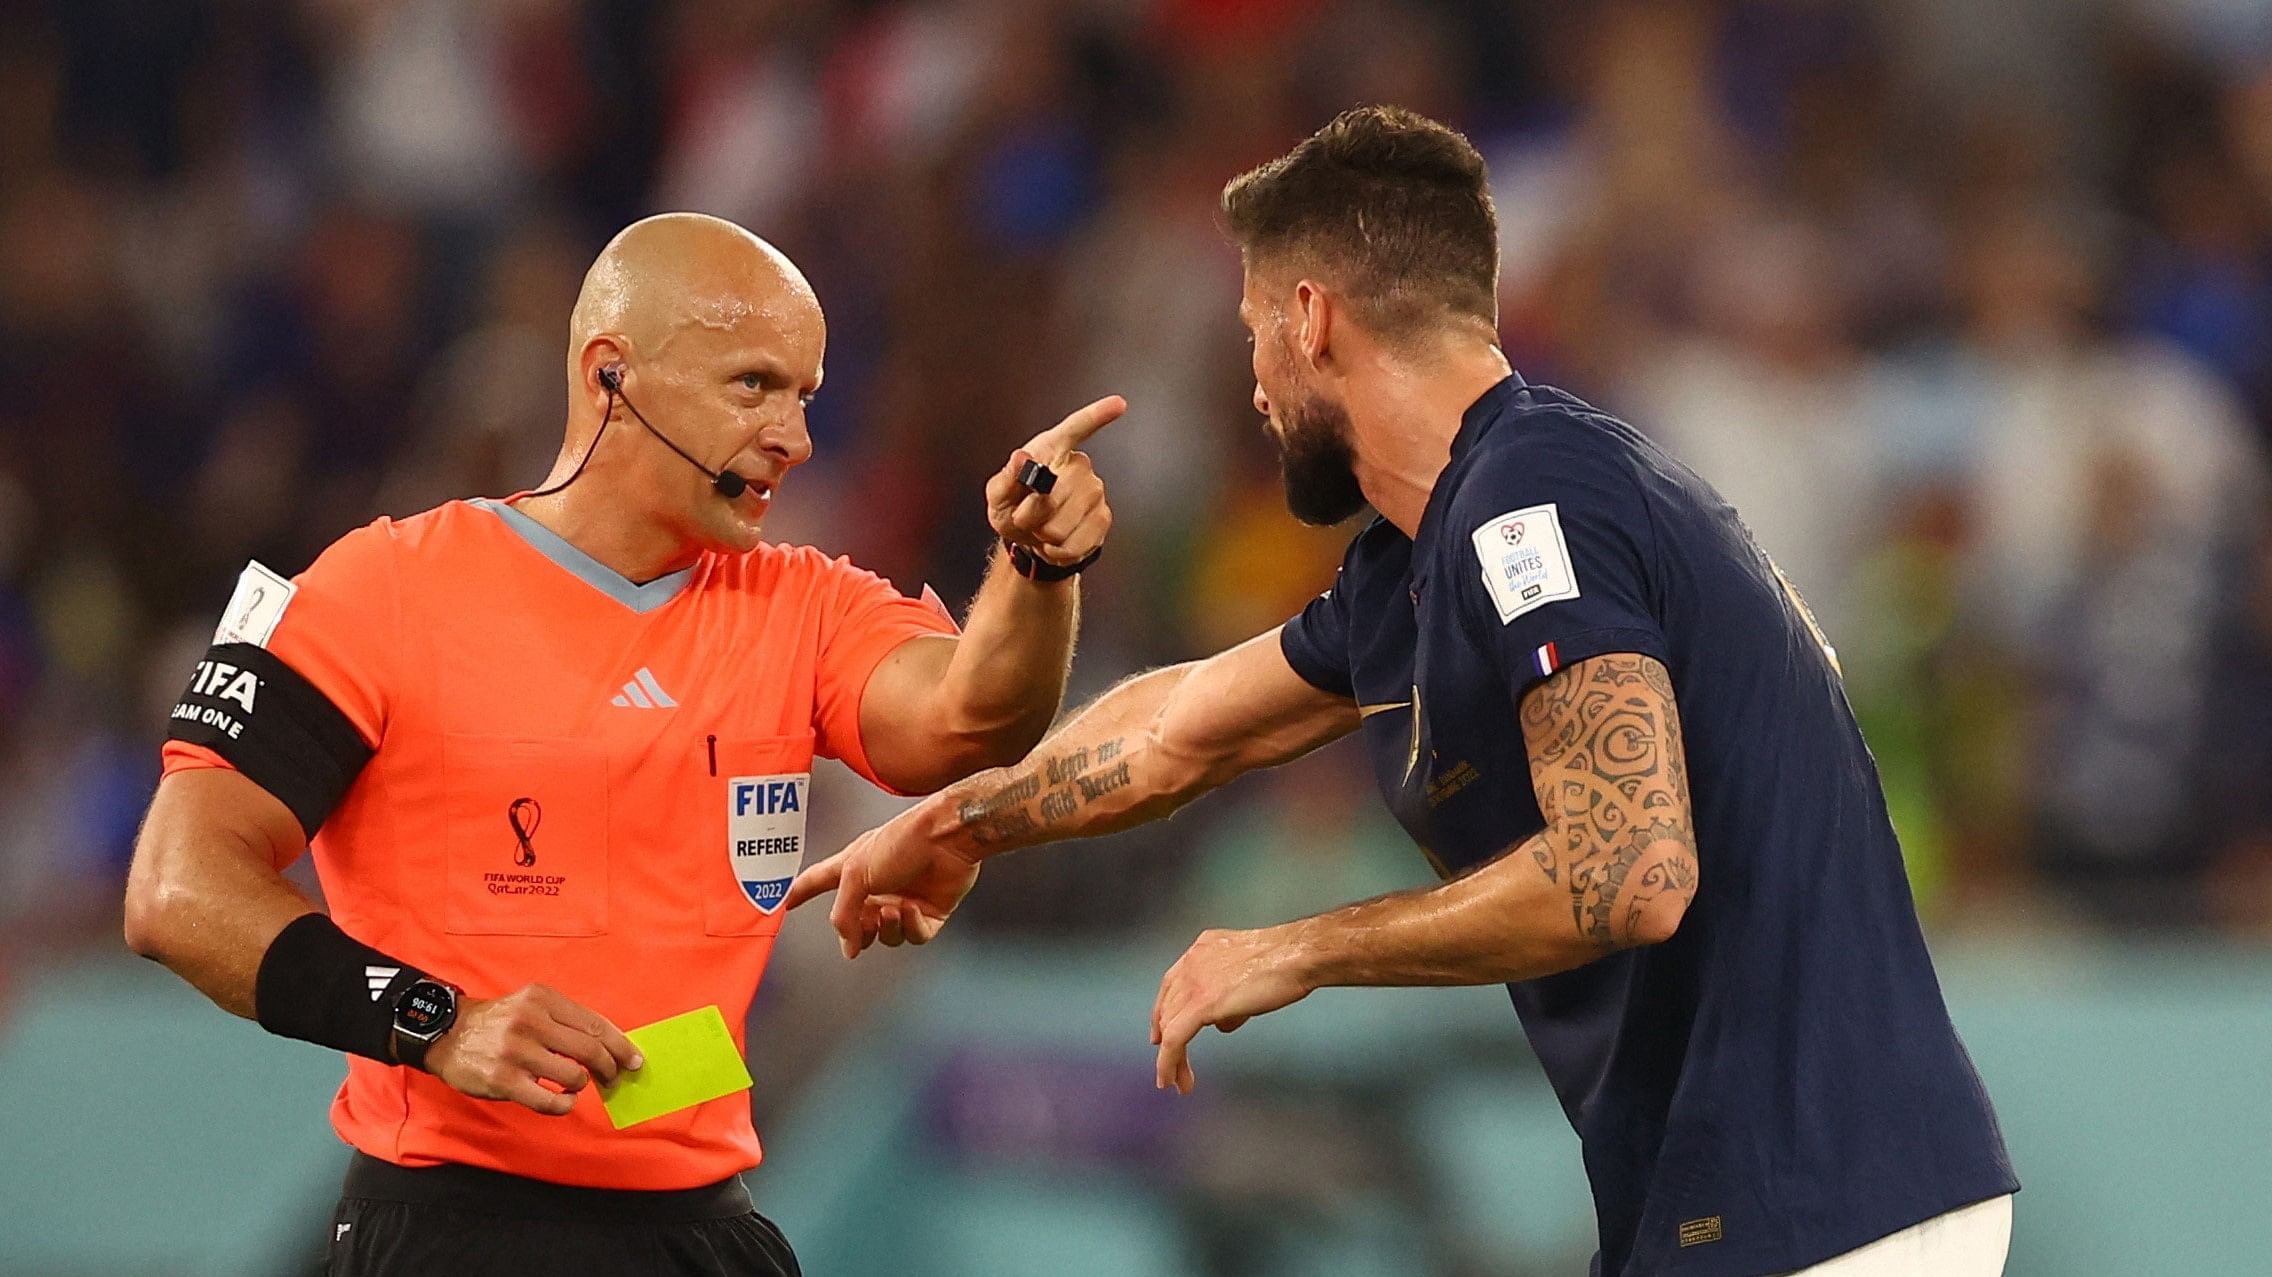 Poland's Szymon Marciniak to referee World Cup final between Argentina